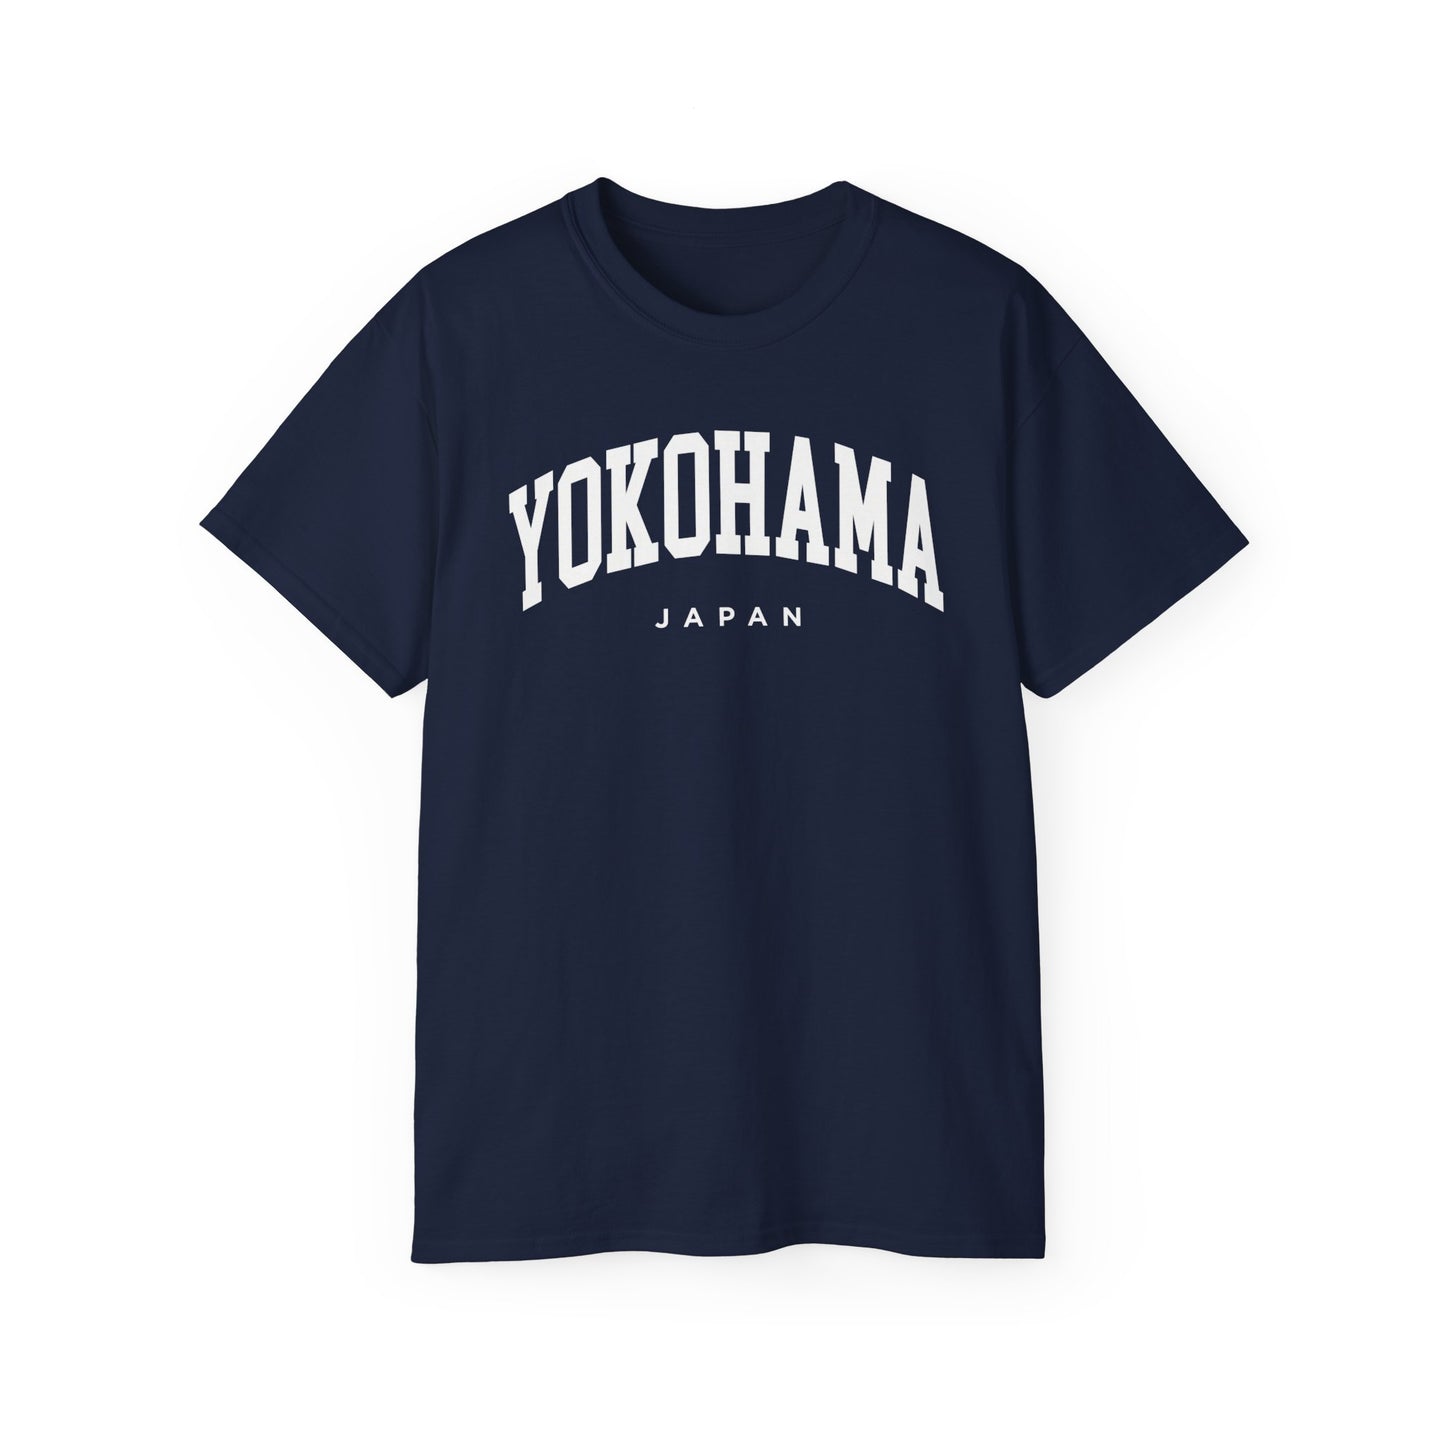 Yokohama Japan Tee